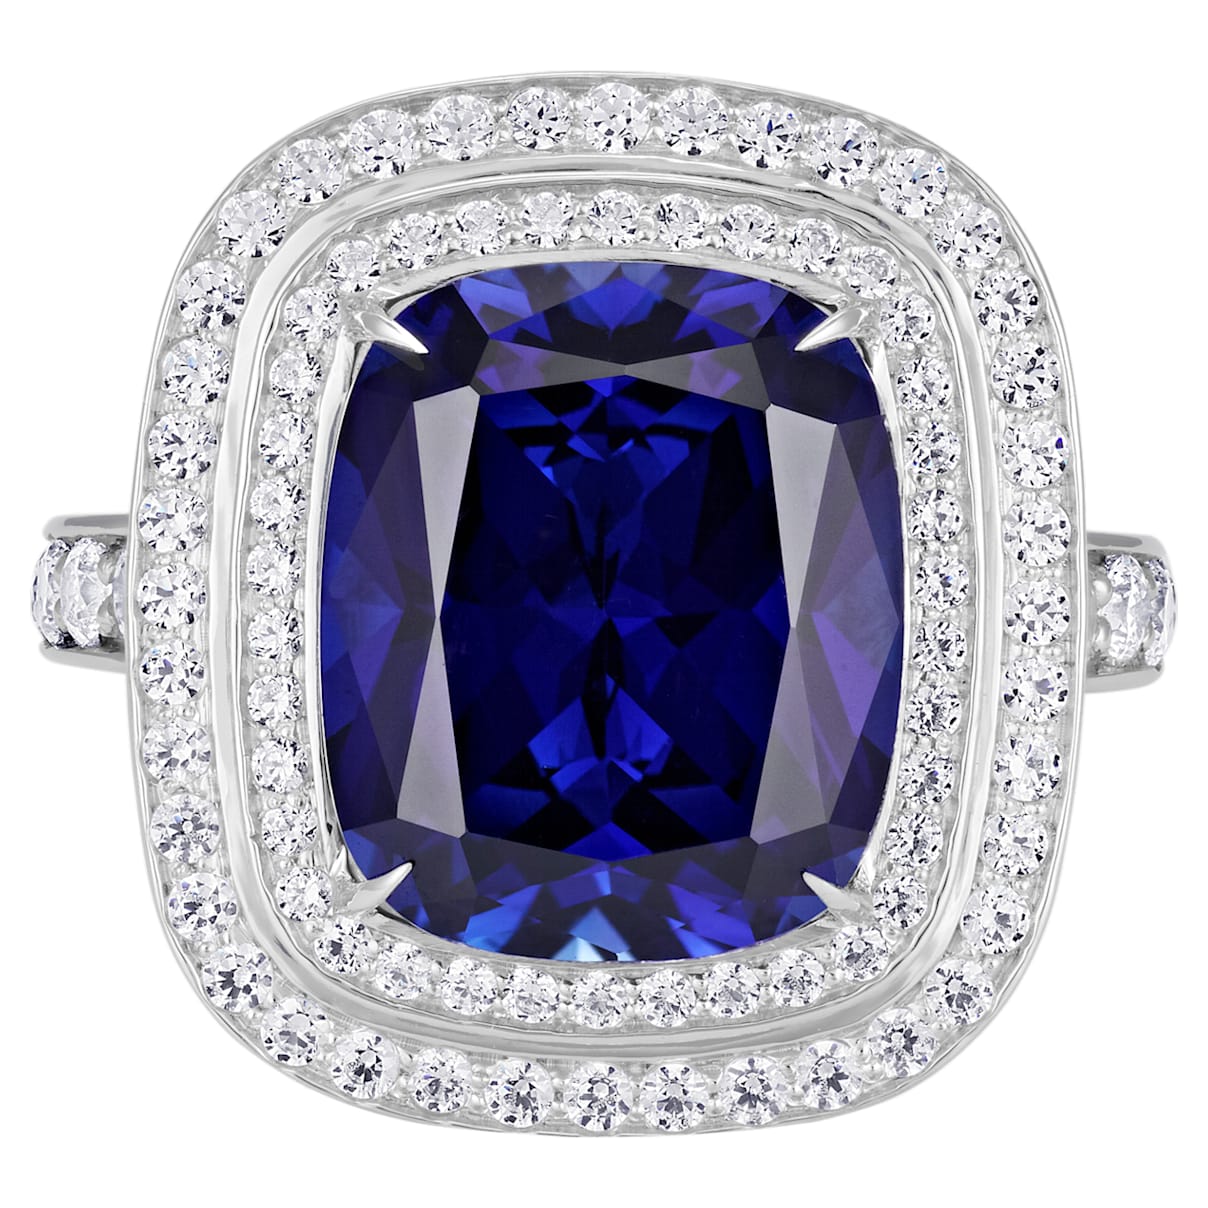 Ángel Double Halo Ring, Swarovski Created Sapphire, 18K White Gold, Size 58